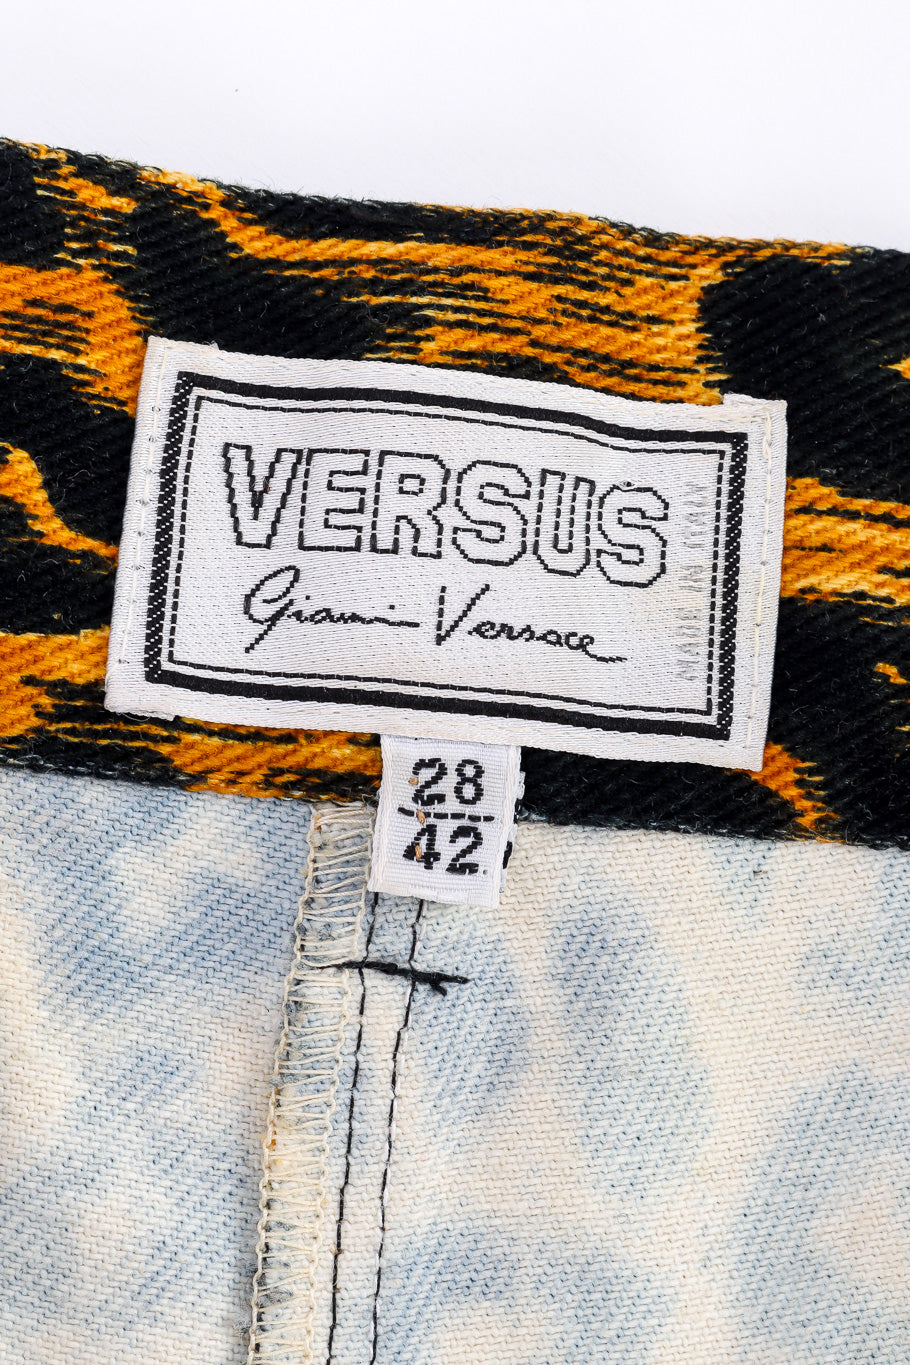 Versus Versace Leopard Print Denim Pant label closeup @Recessla